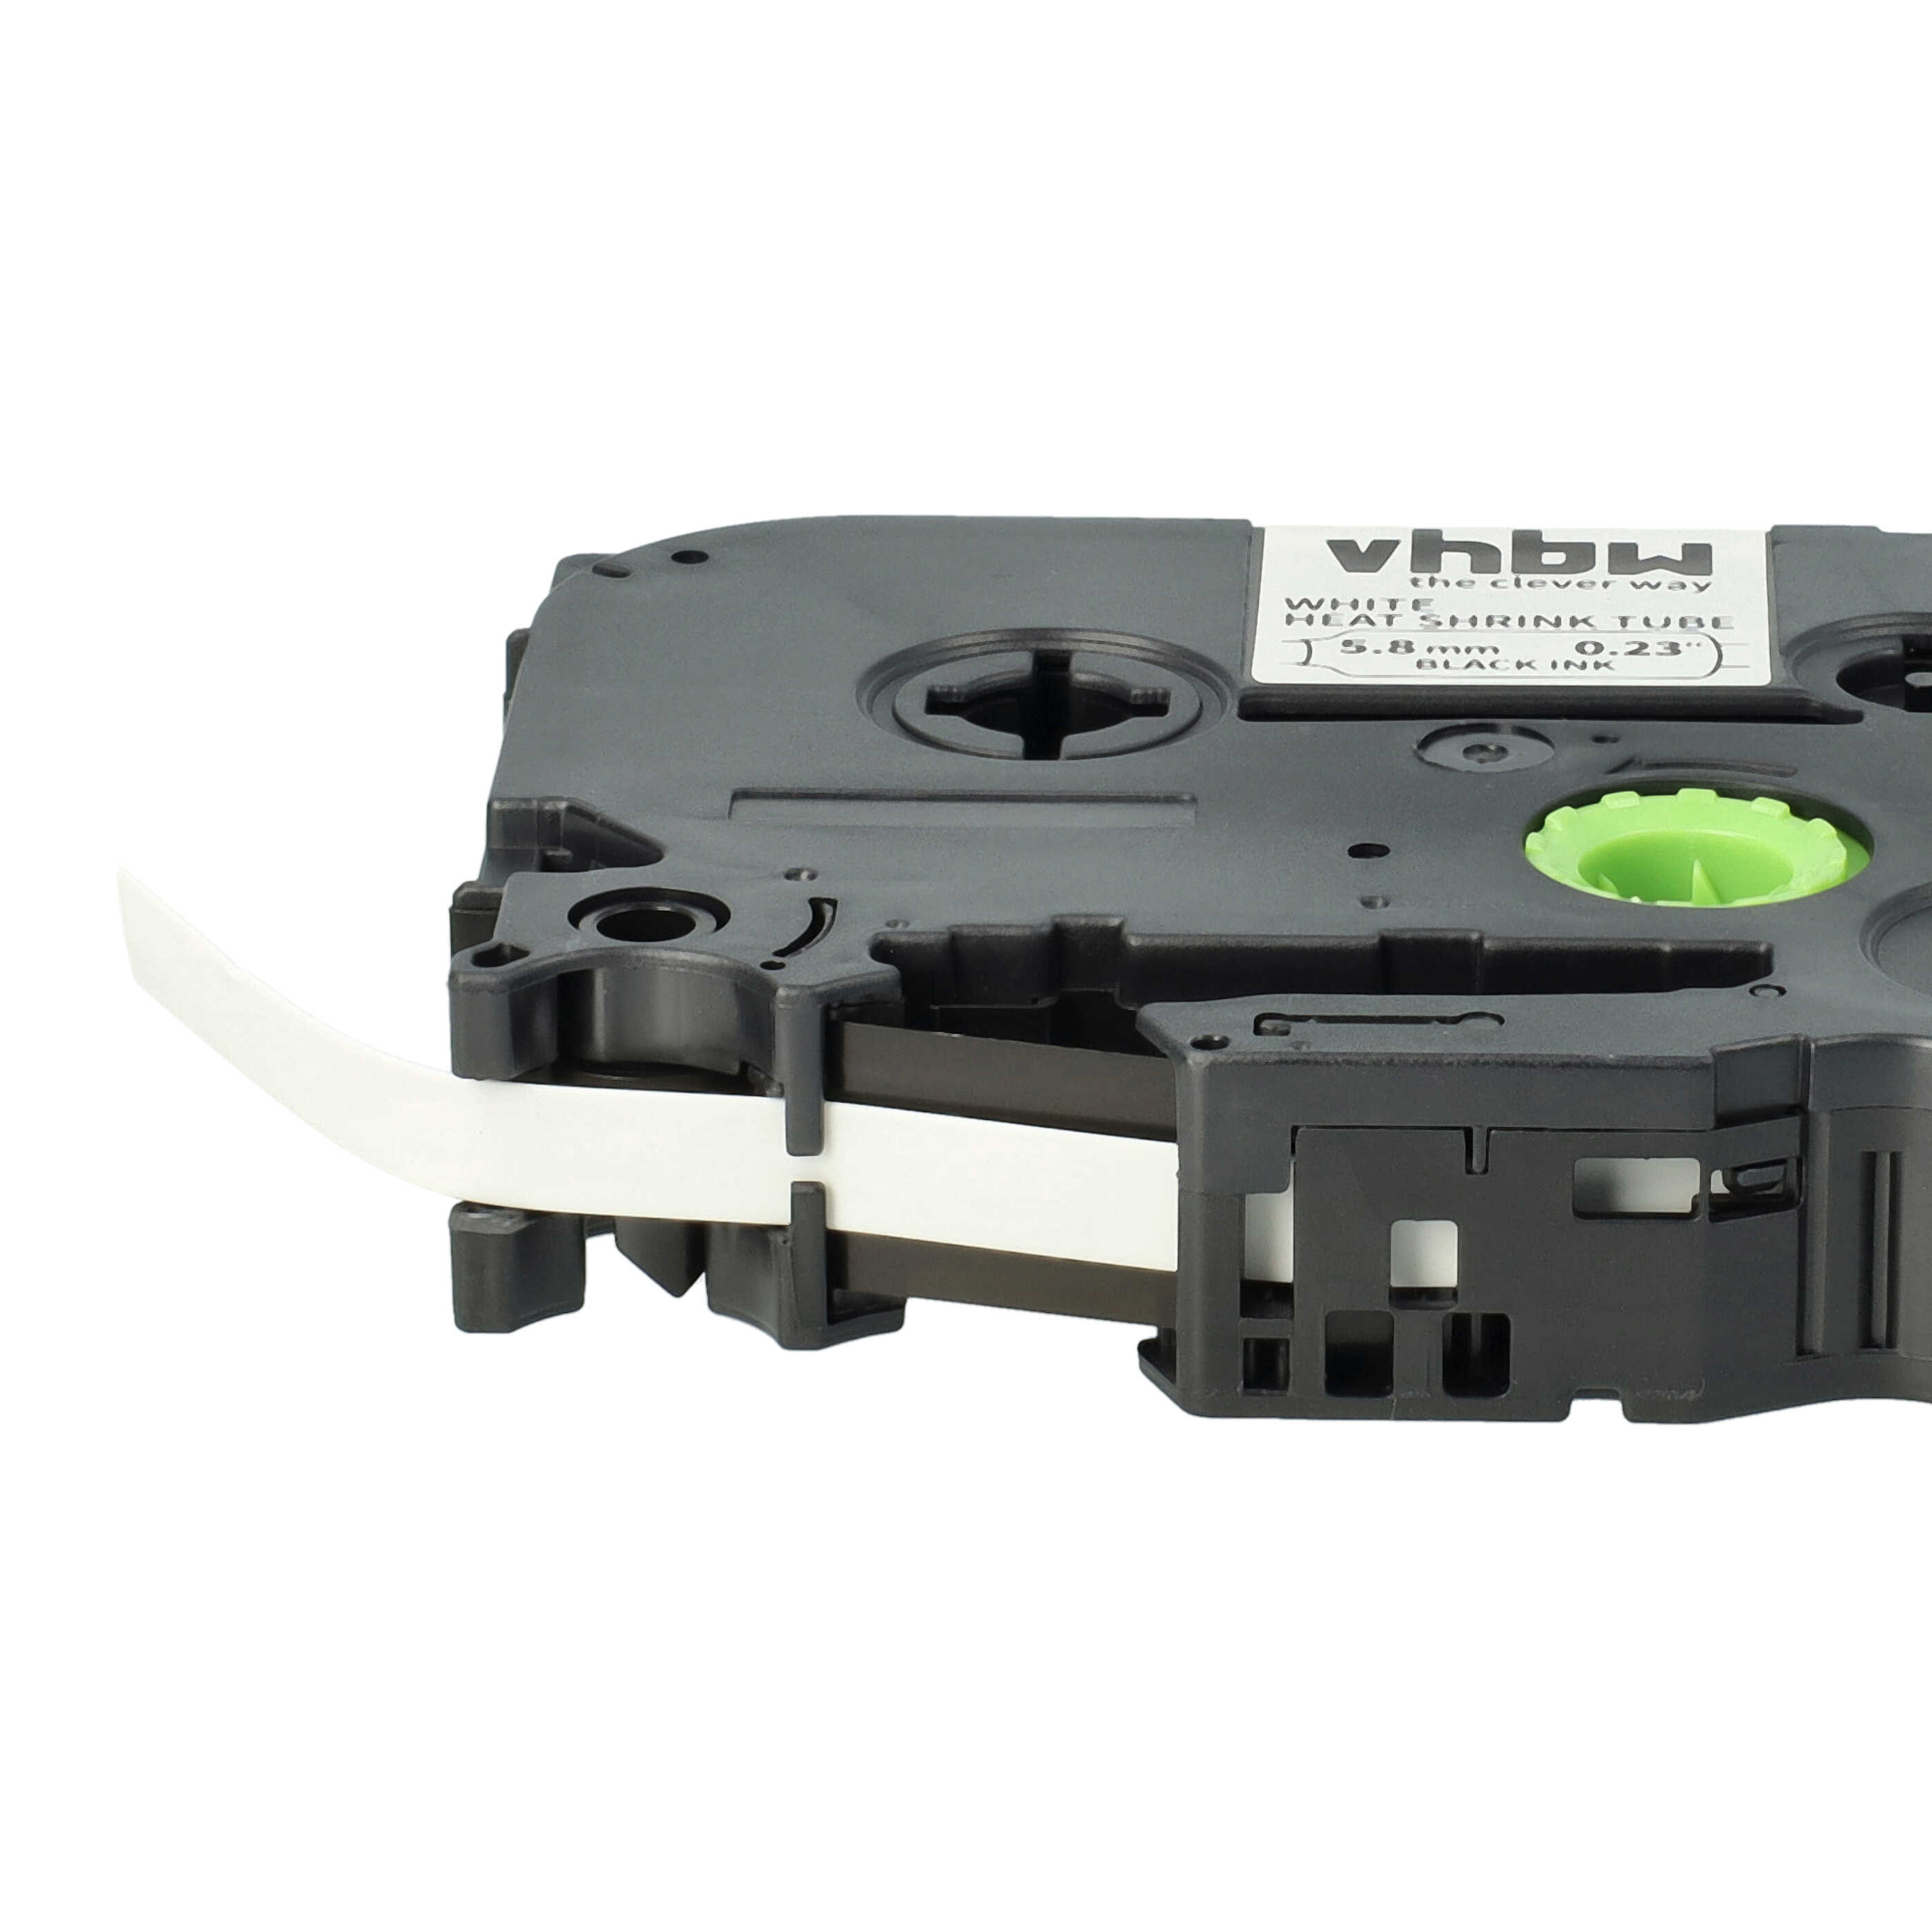 Cassetta tubi termorestringenti sostituisce Brother AHS-211 per etichettatrice Brother 5,8mm nero su bianco